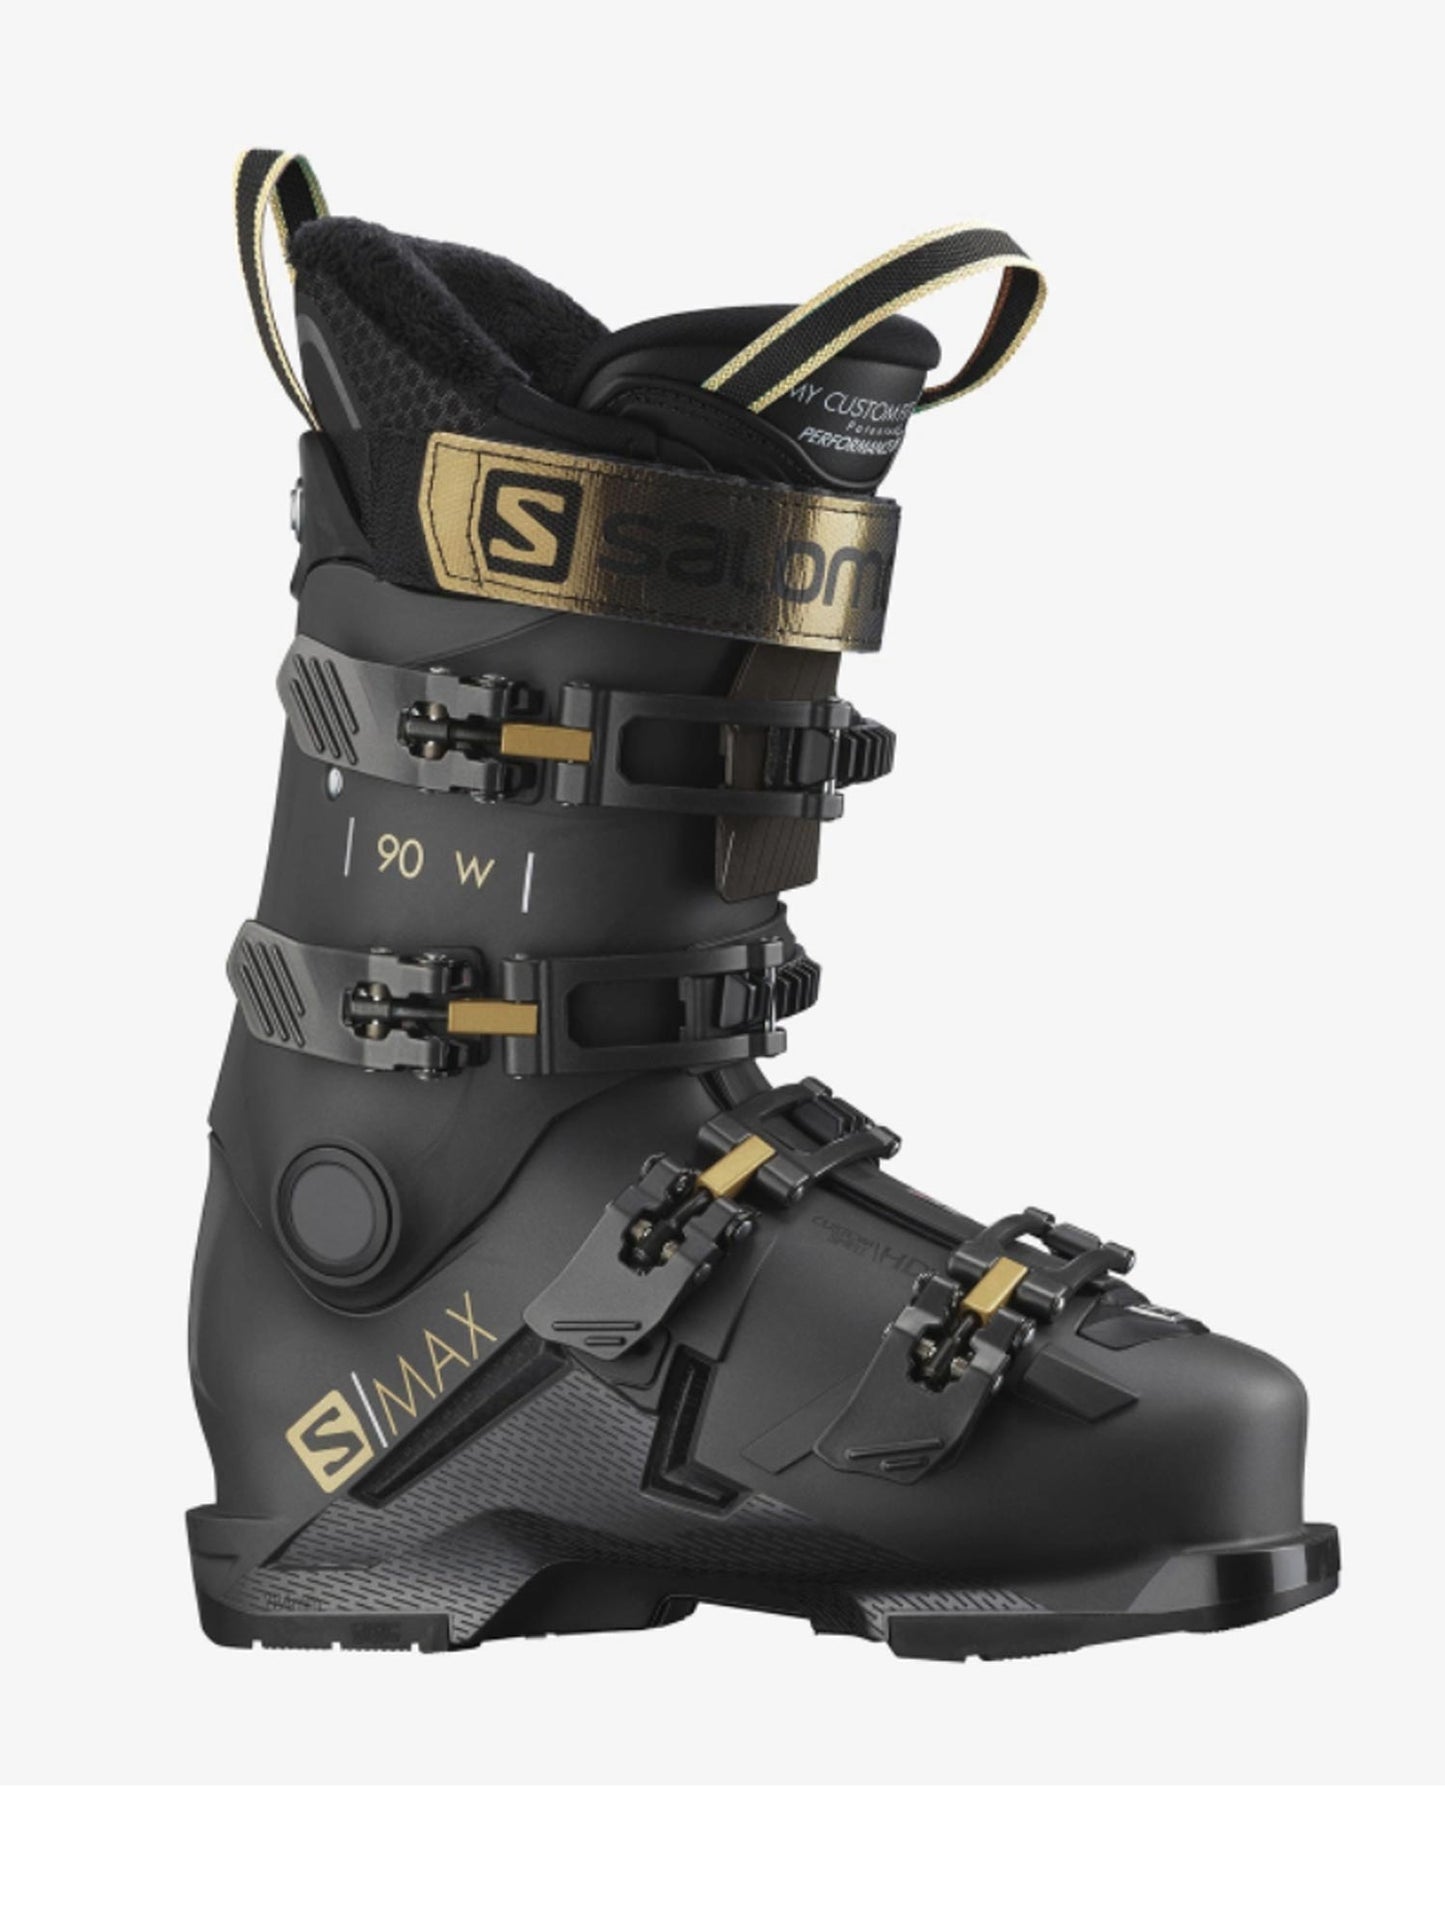 women's Salomon ski boots, black wtih gold accents